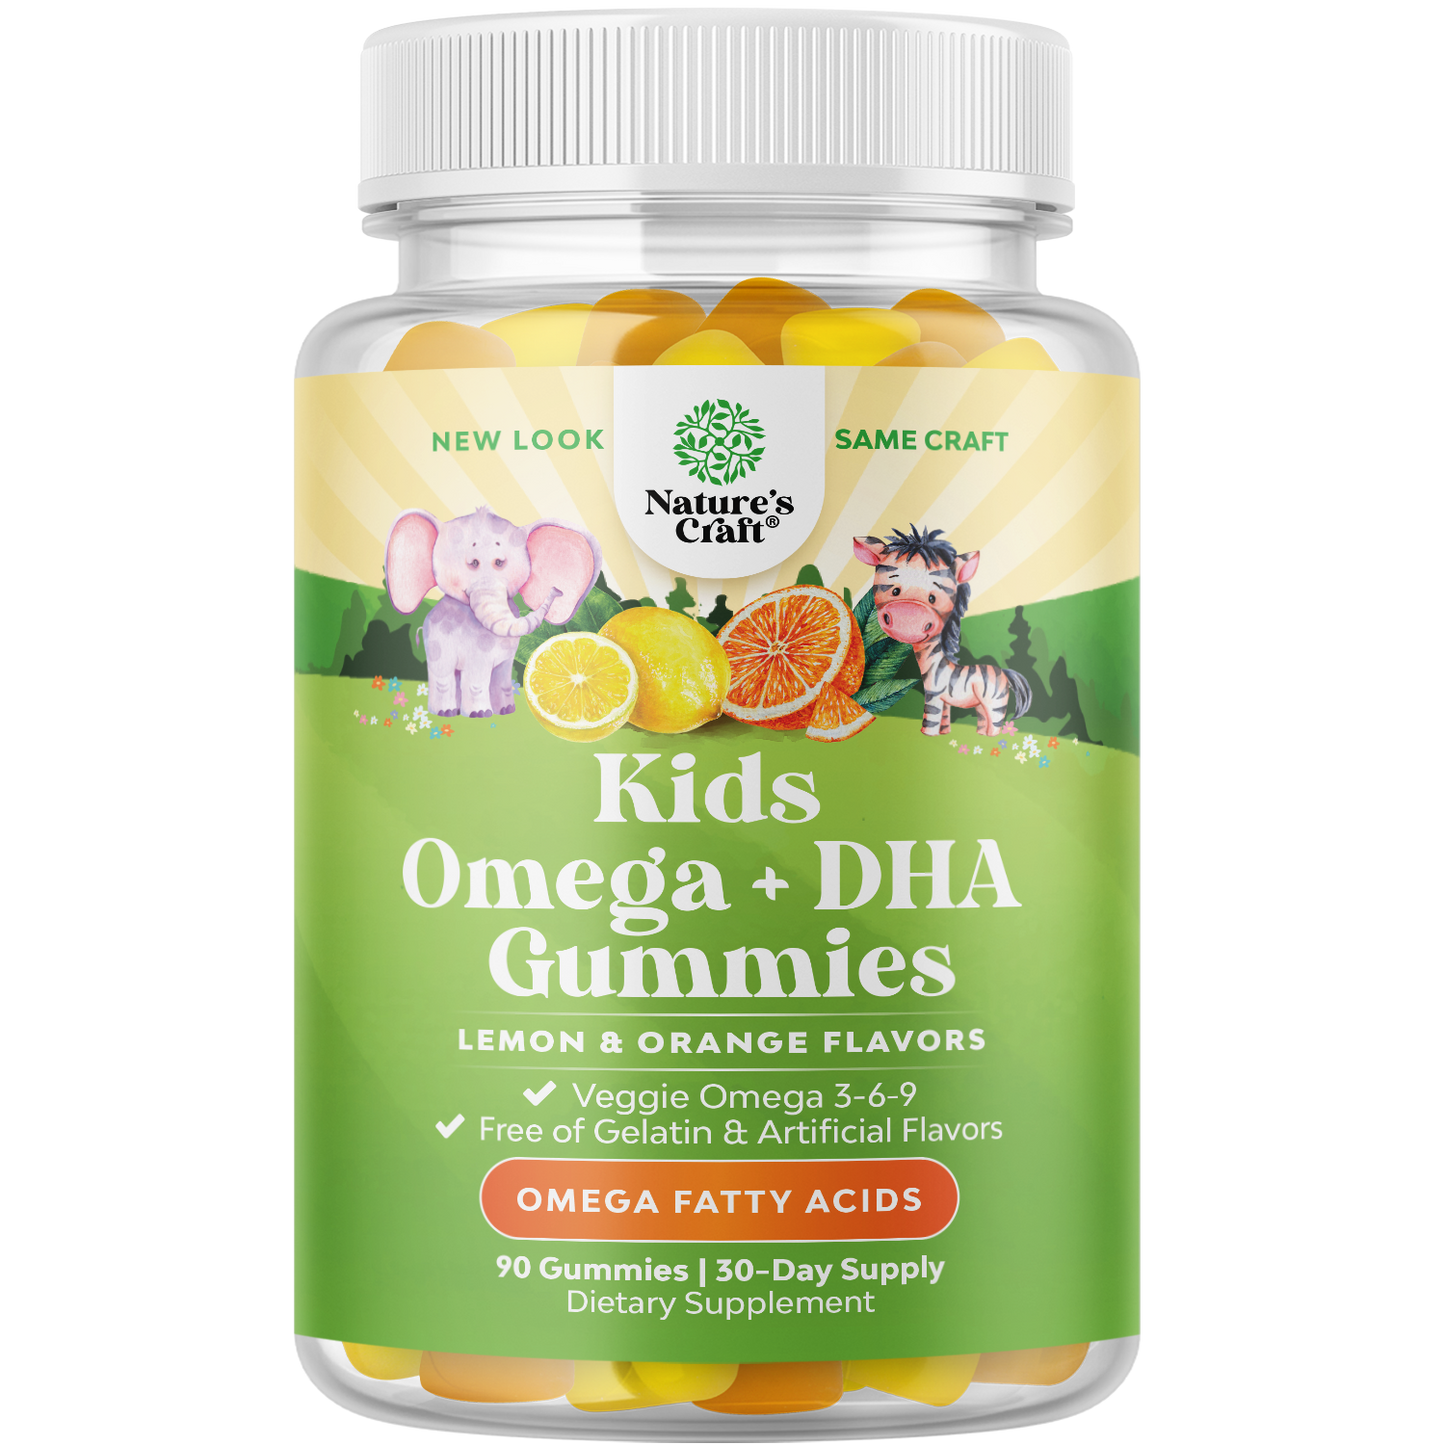 Kids Omega + DHA Gummies - 90 Gummies